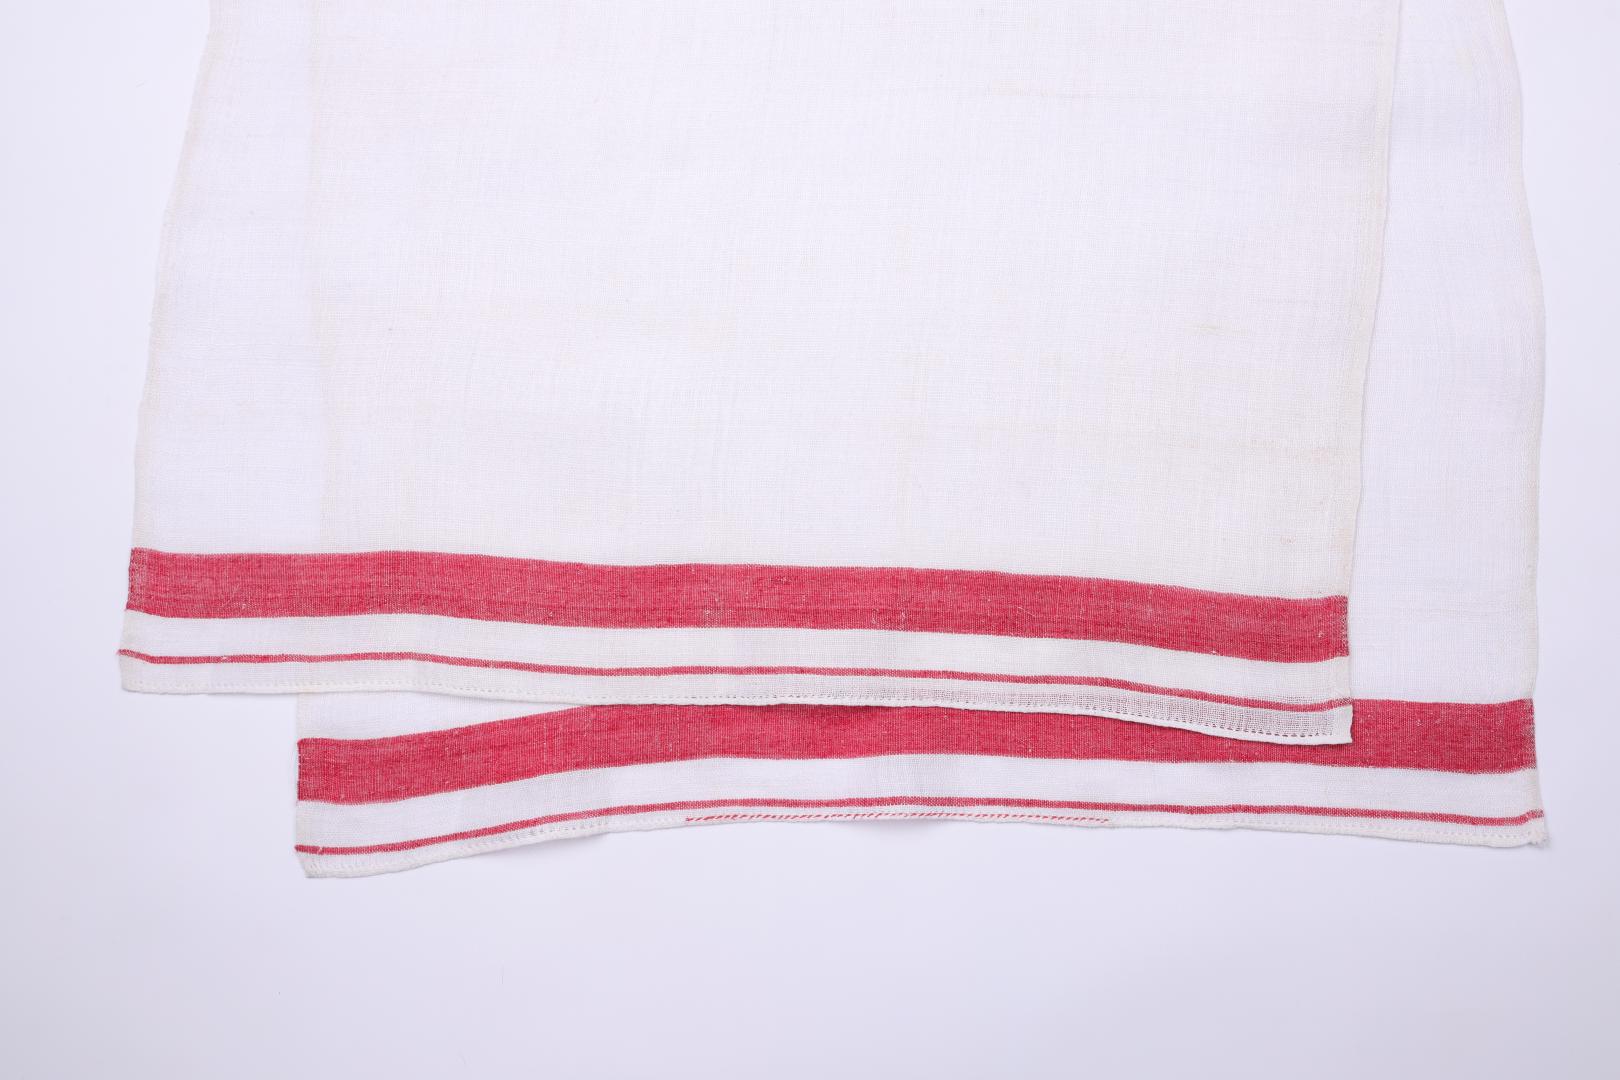 Home-woven scarf made of serpanok (a light gauzey material)